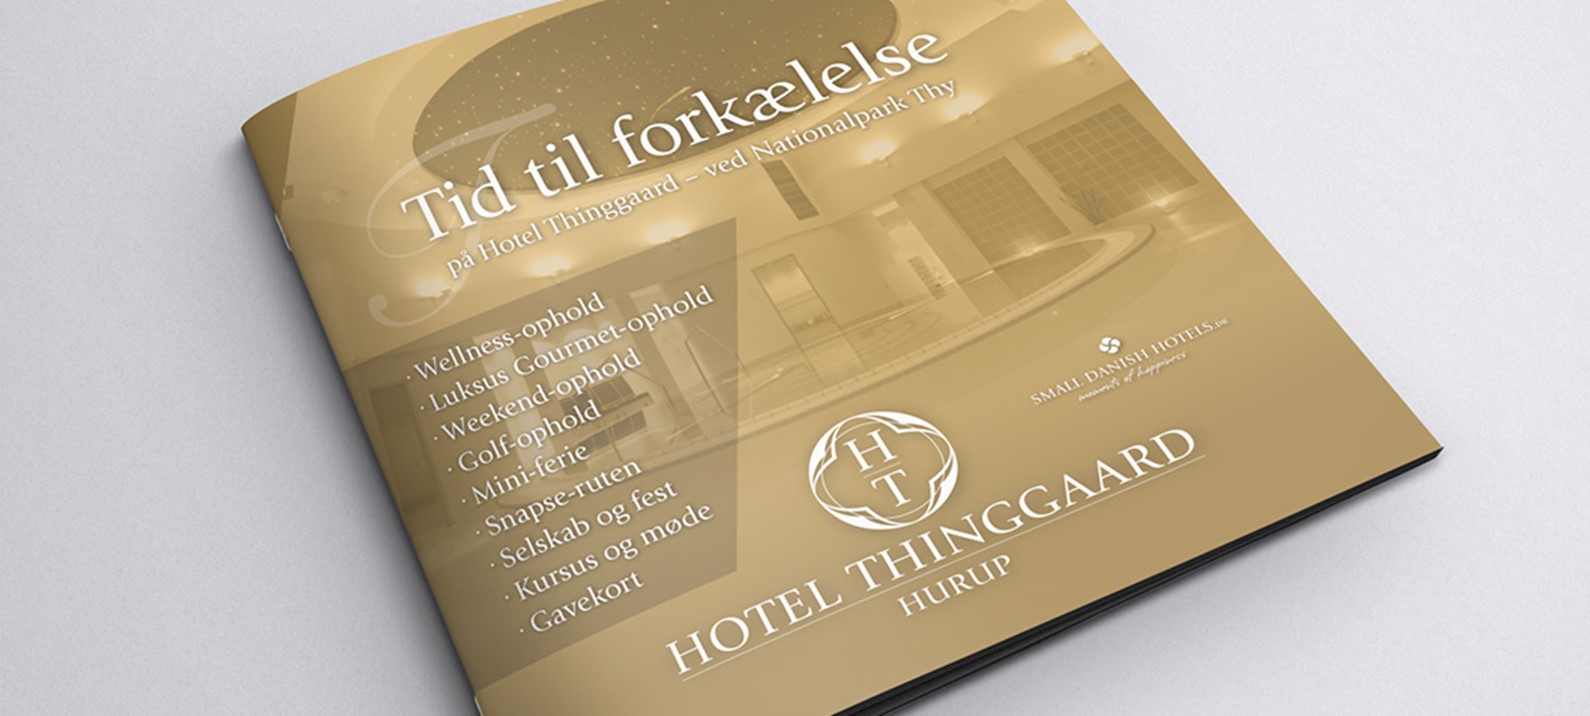 Ny opholdsfolder til Hotel Thinggaard Kong Gulerod Reklamebureau ApS